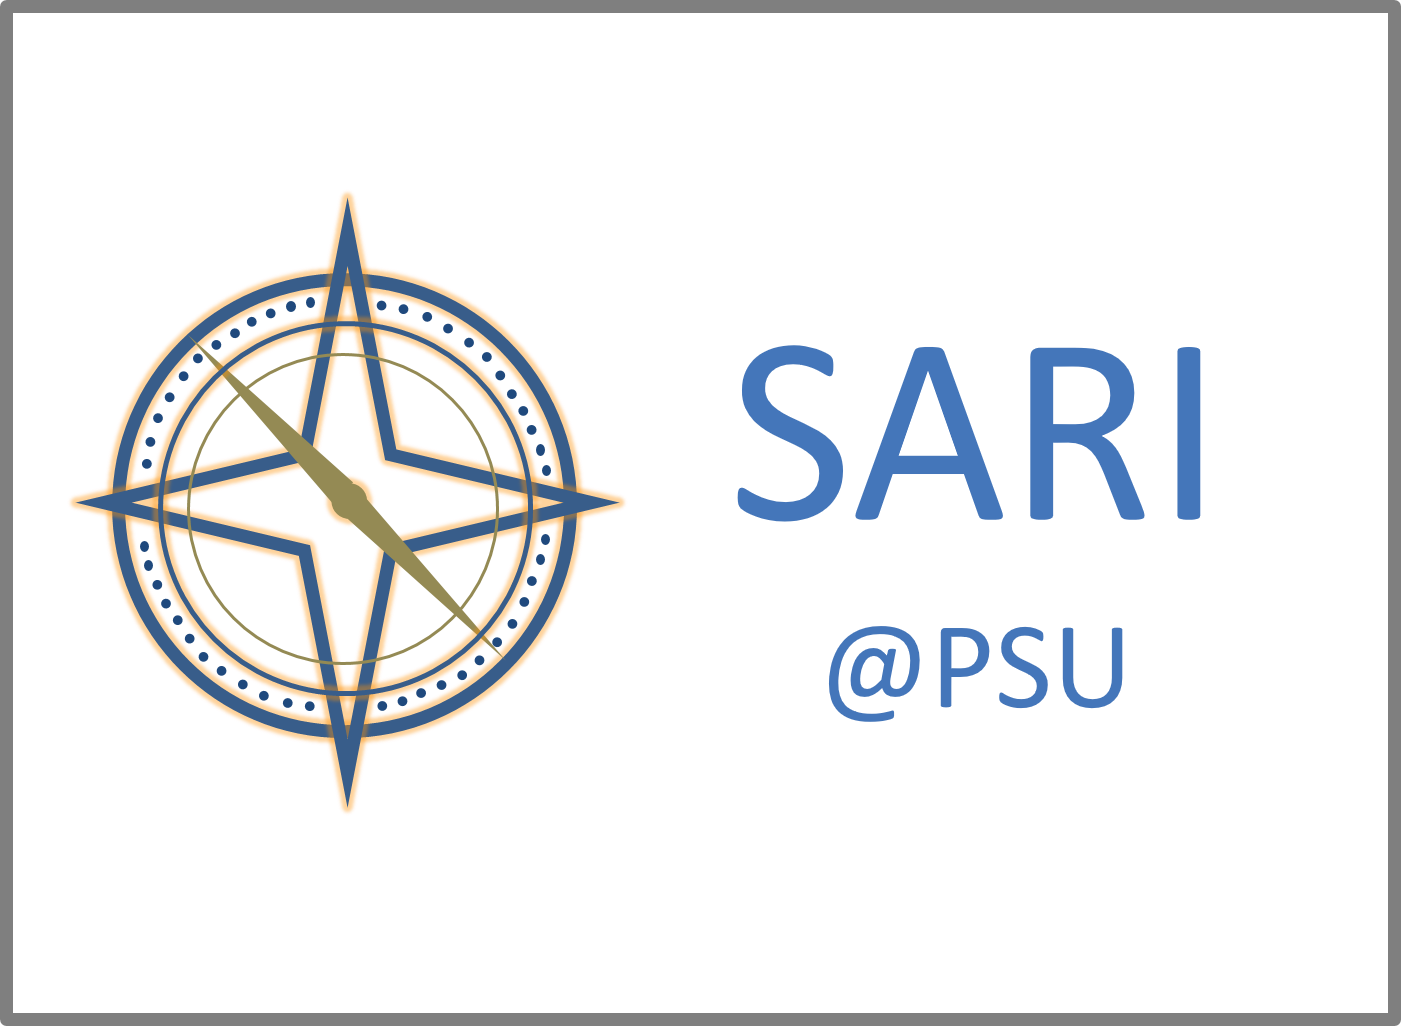 SARI at PSU logo